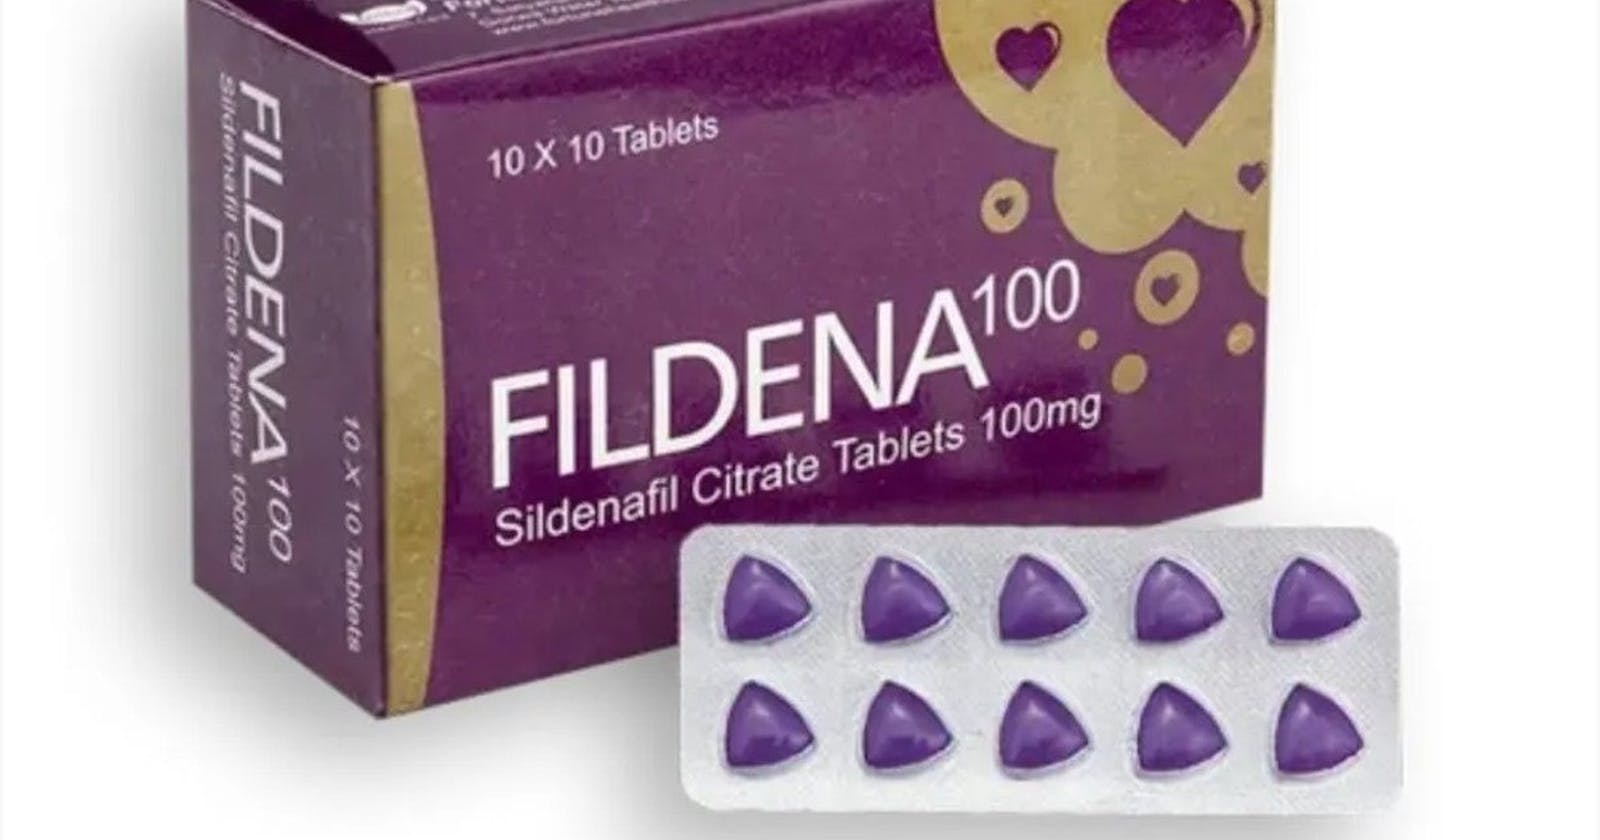 Fildena 100 mg : A Path to Enhanced Intimacy 💊💕